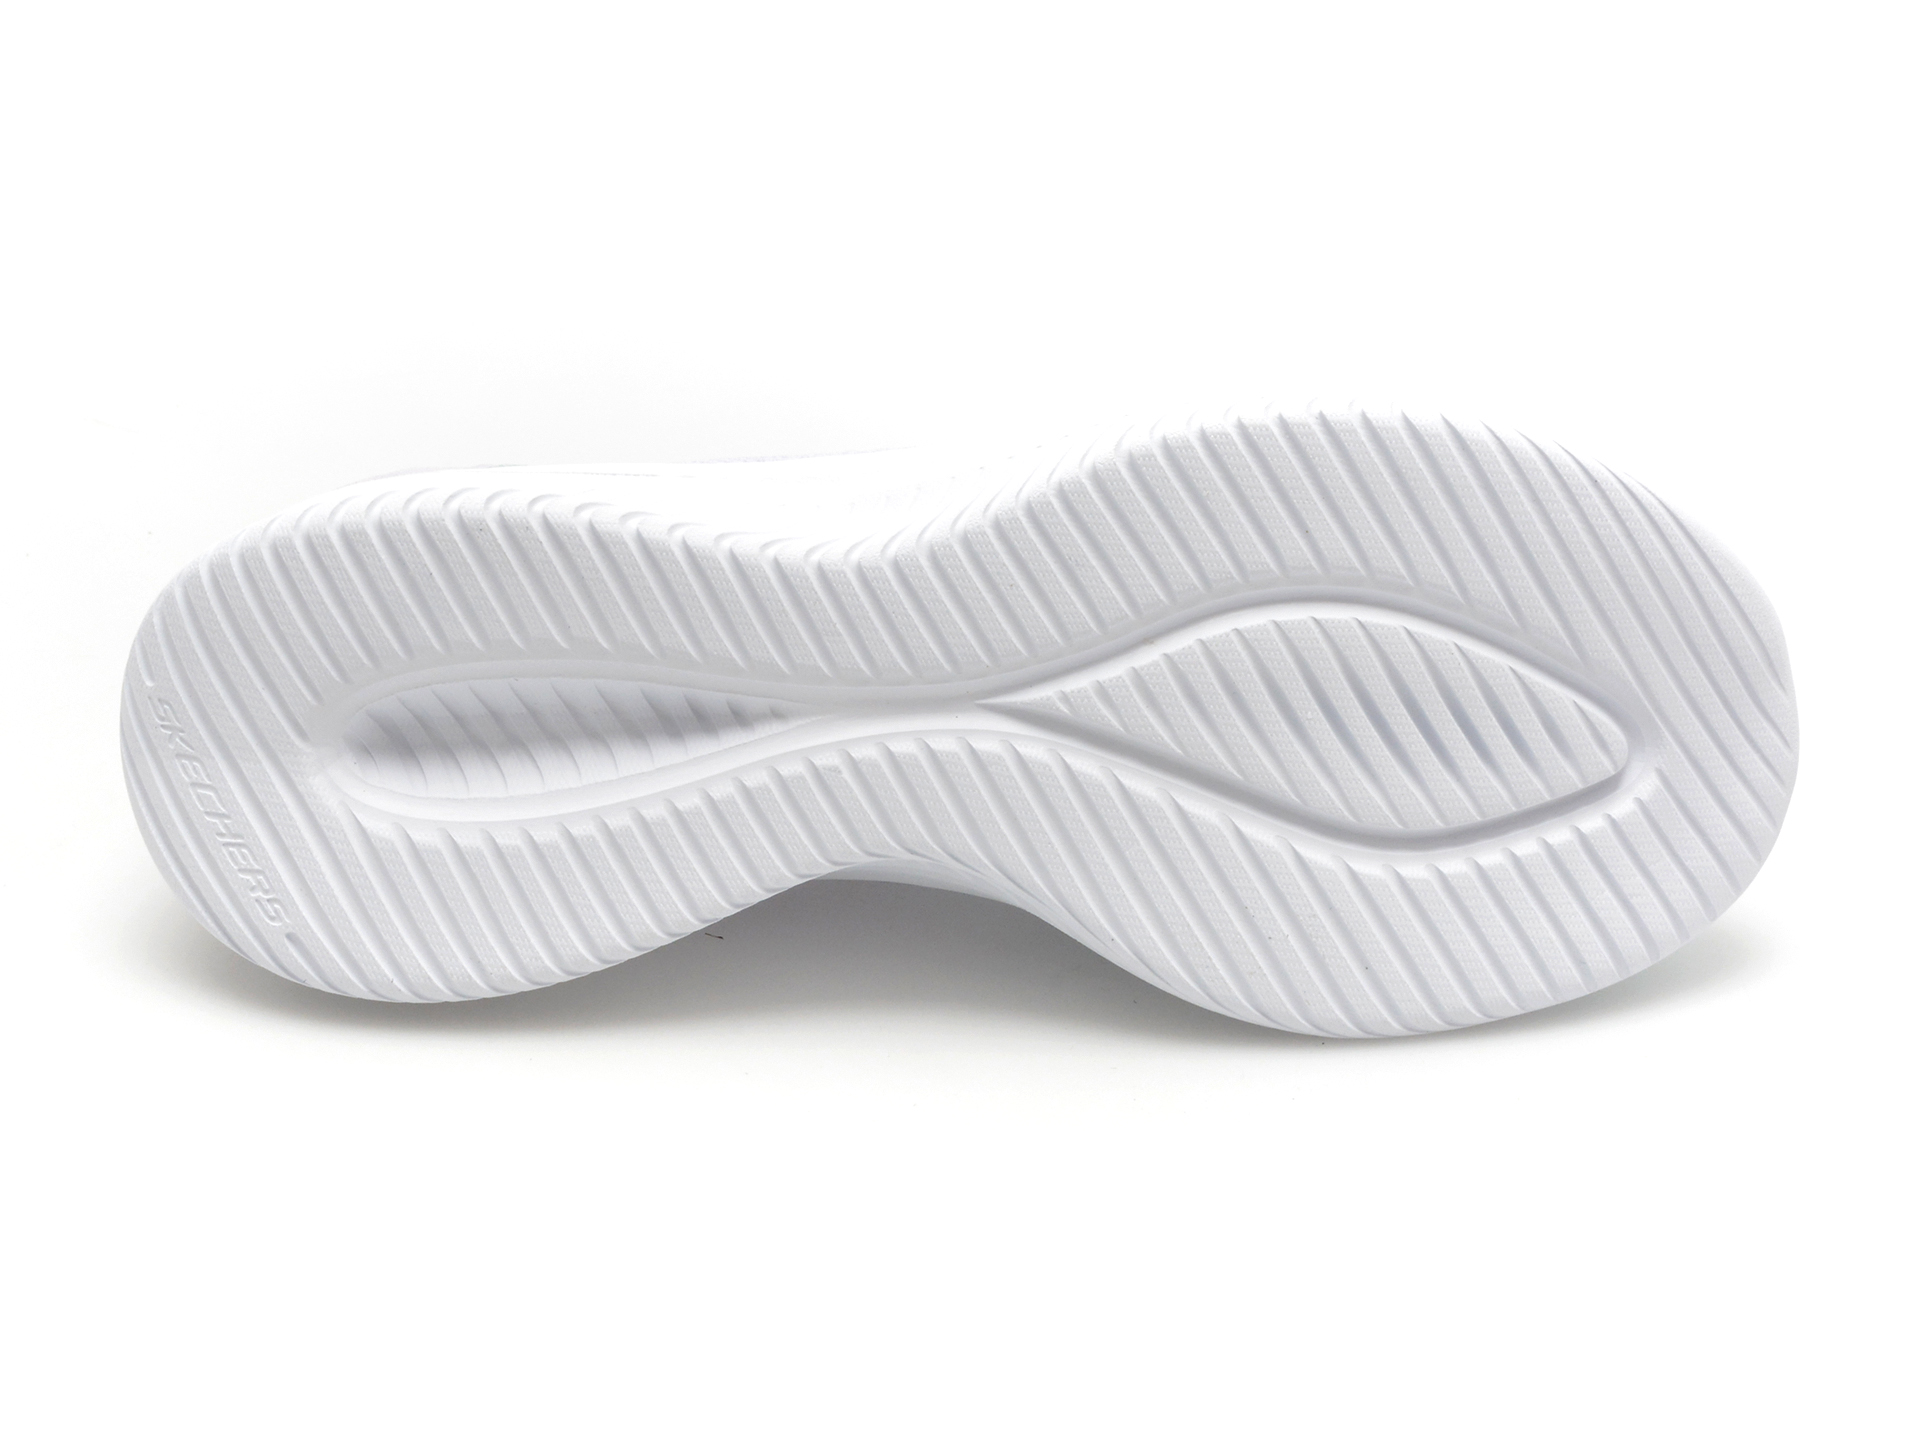 Pantofi sport SKECHERS verzi, ULTRA FLEX 3.0, din material textil